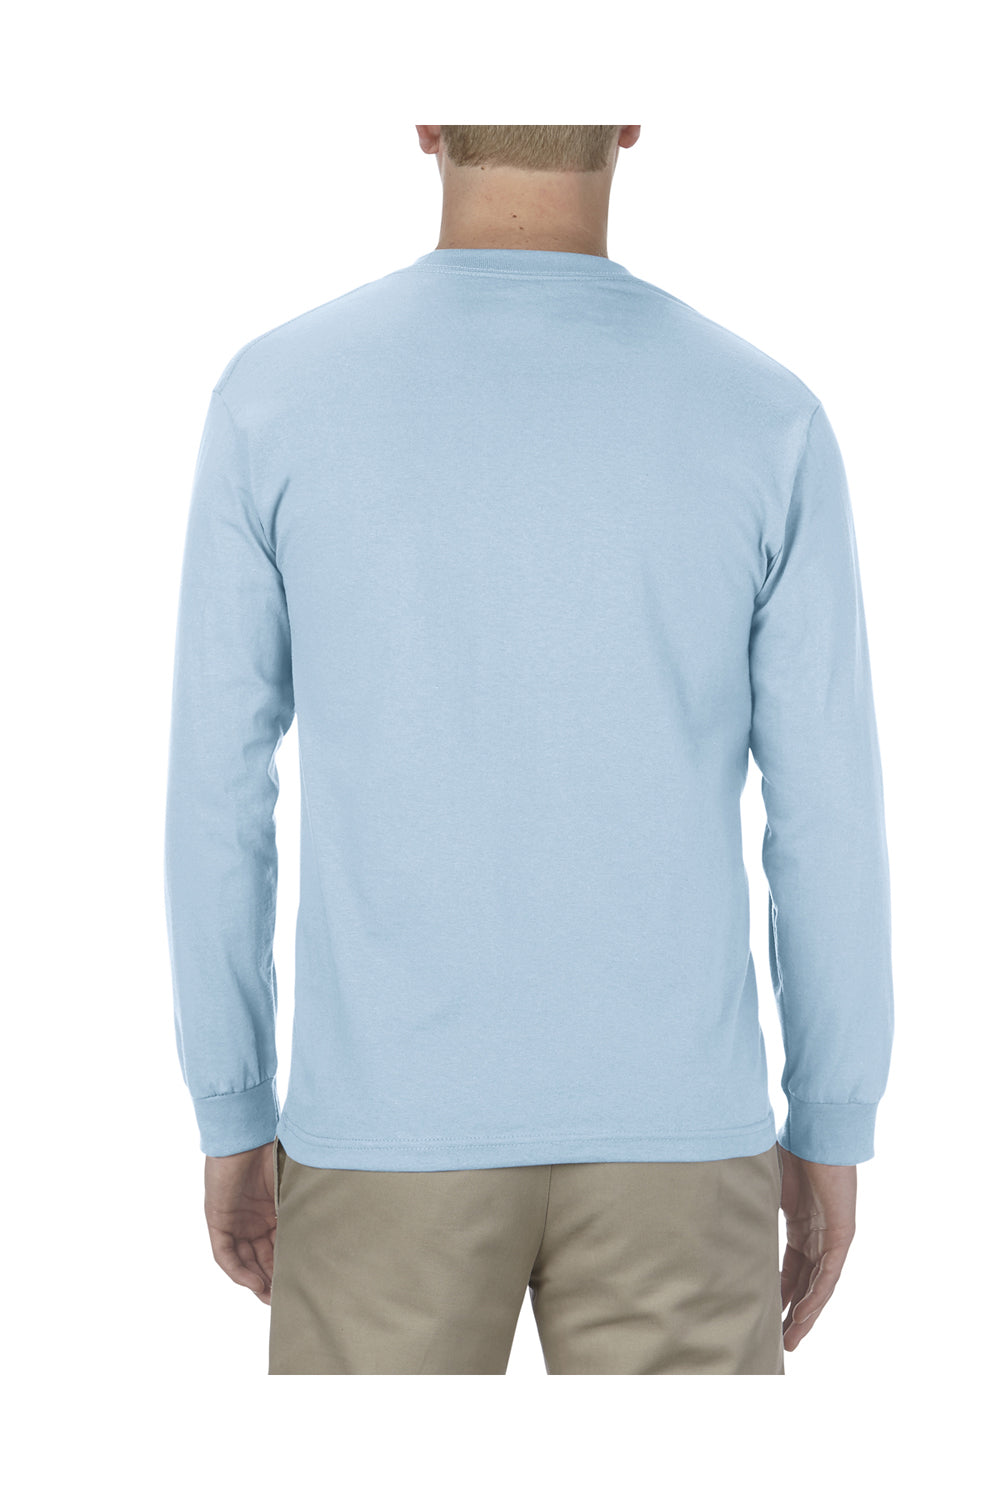 Alstyle AL1304 Mens Long Sleeve Crewneck T-Shirt Powder Blue Back